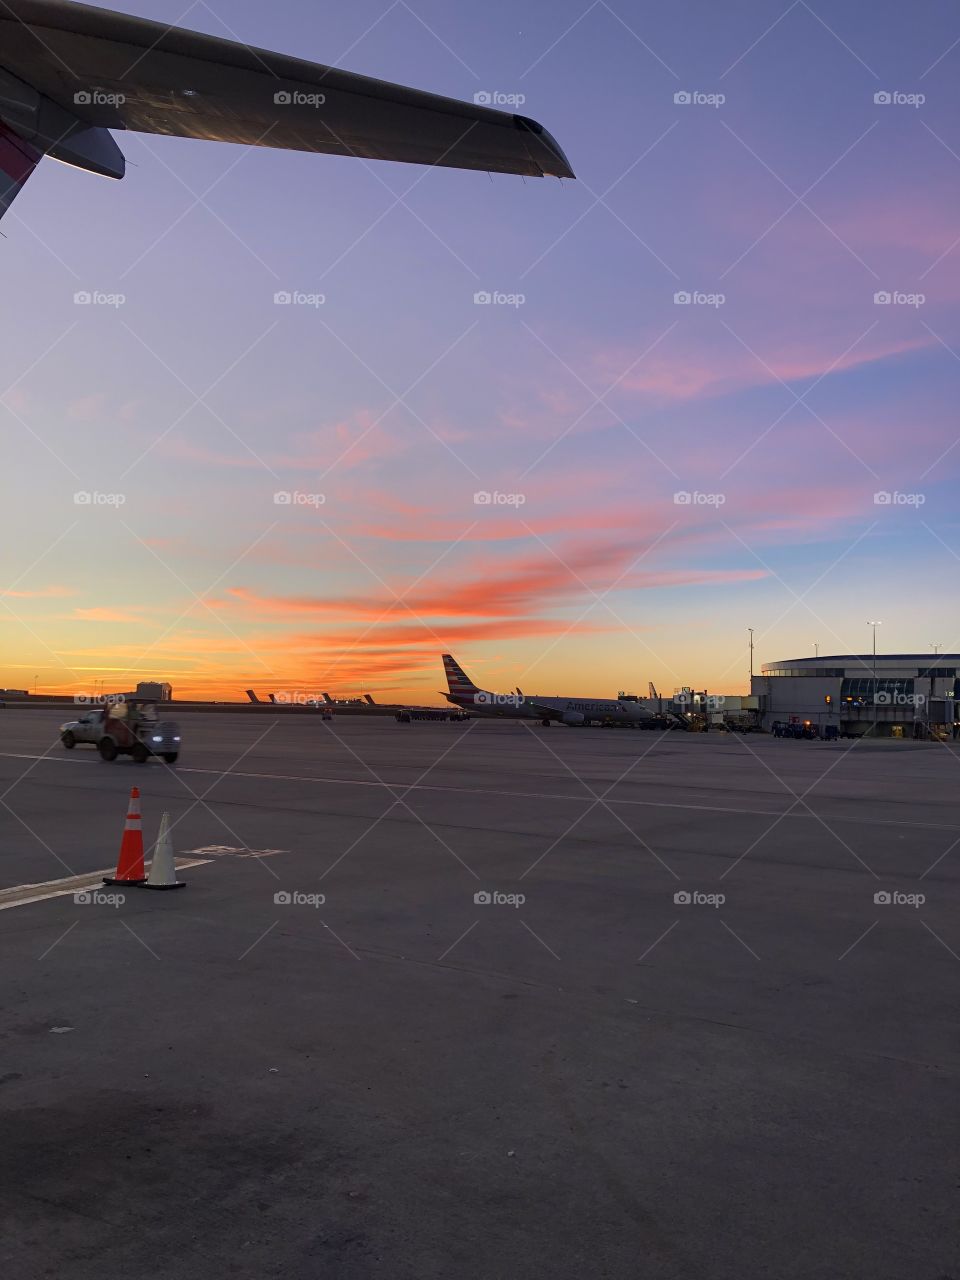 Sunrise over Airport